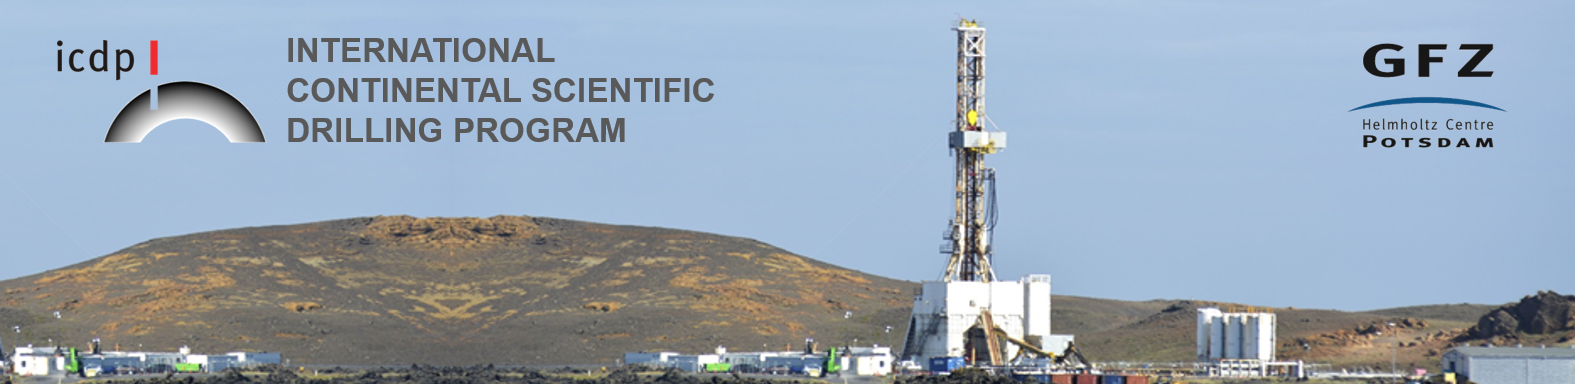 International Continental Scientific Drilling Program